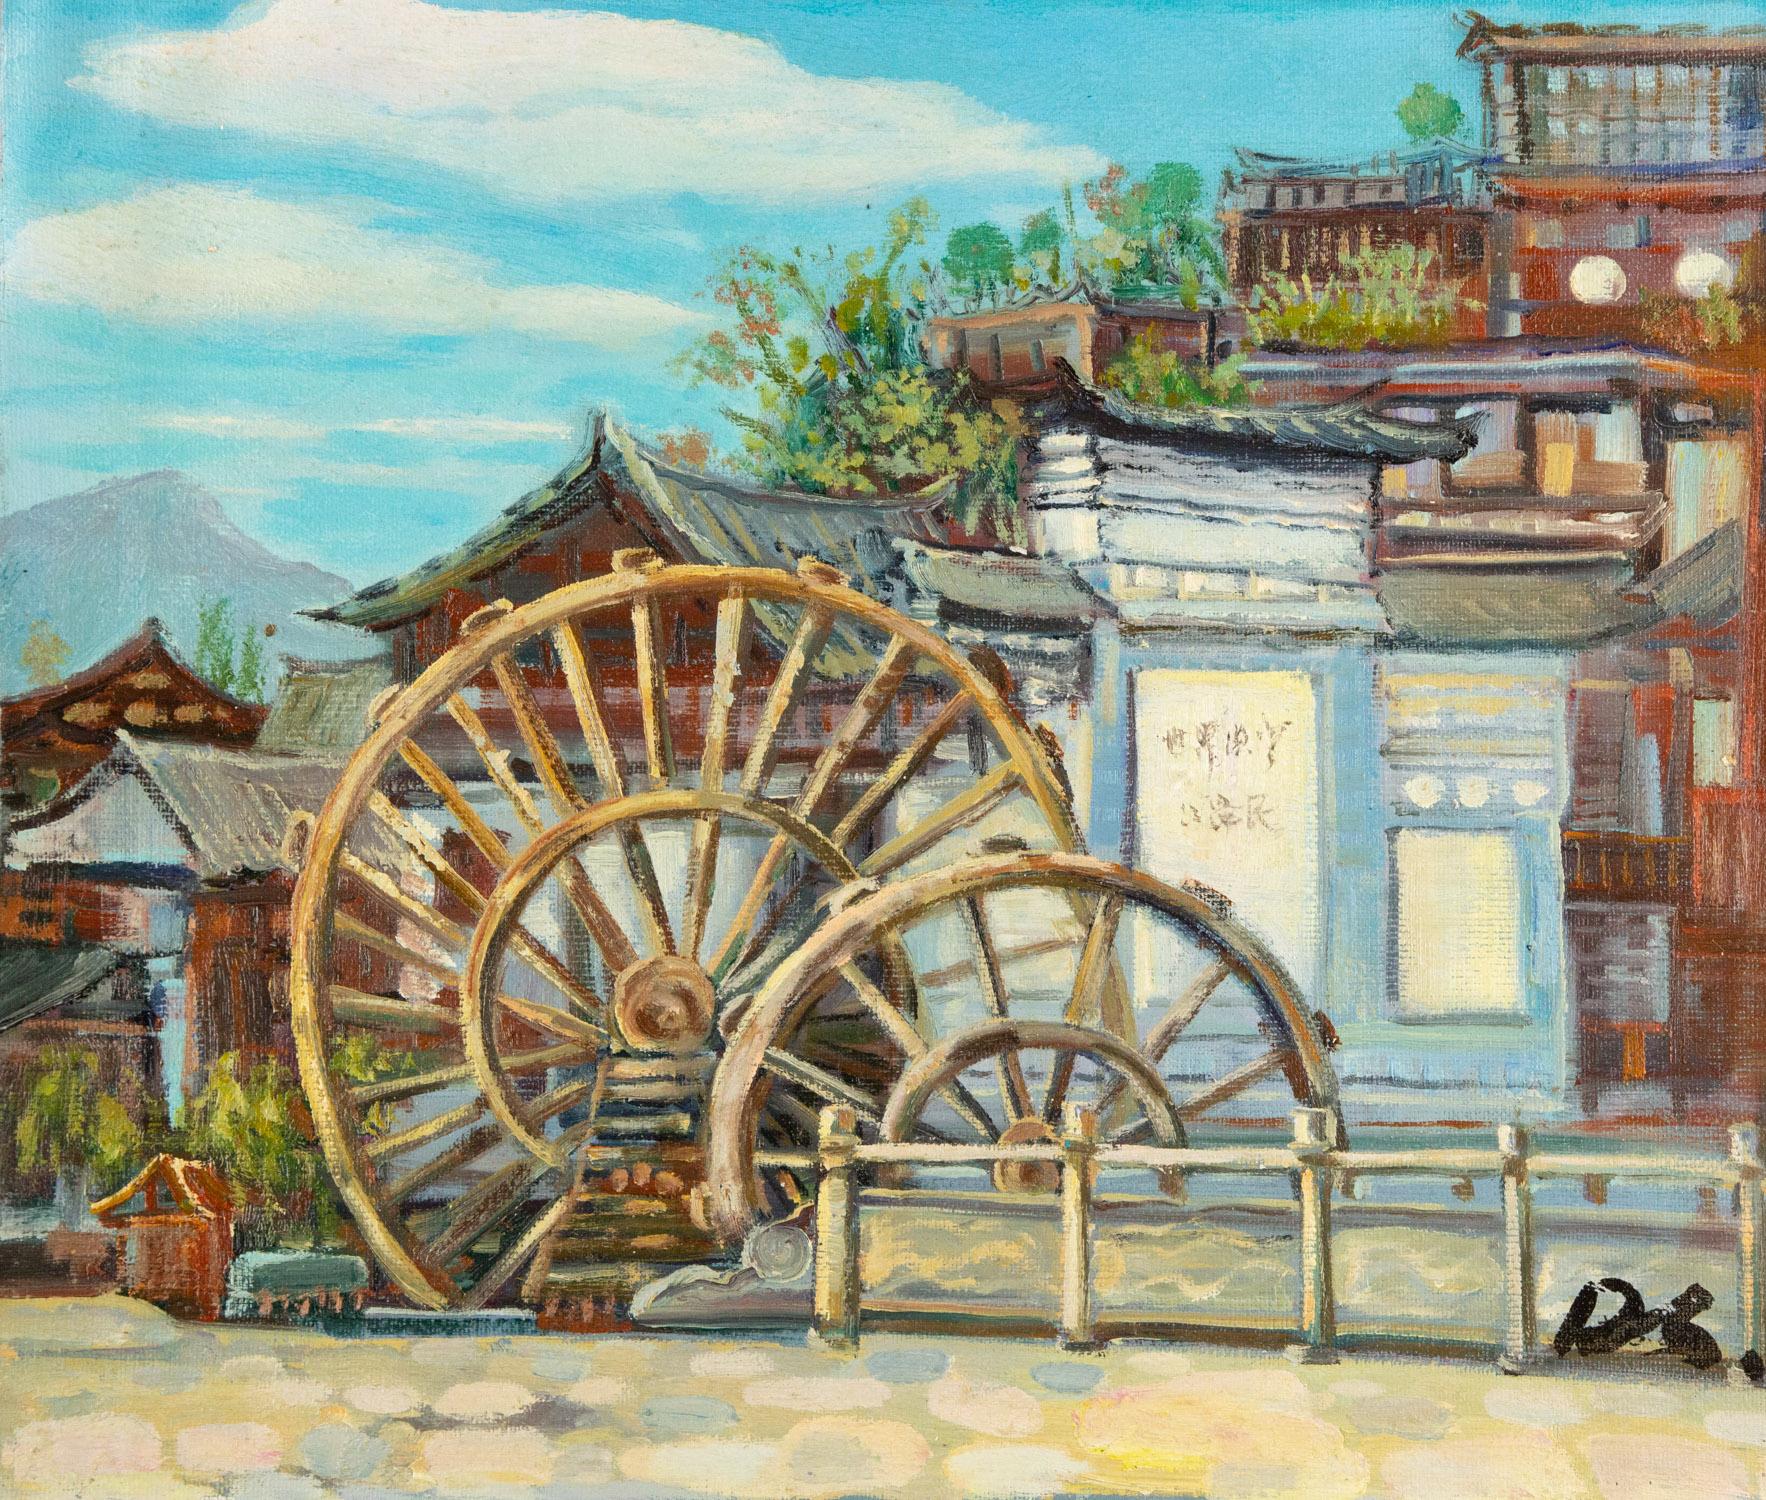 Dejun Wang Landscape Painting - DeJun Wang Landscape Original Oil On Canvas "Lijiang Scenery"